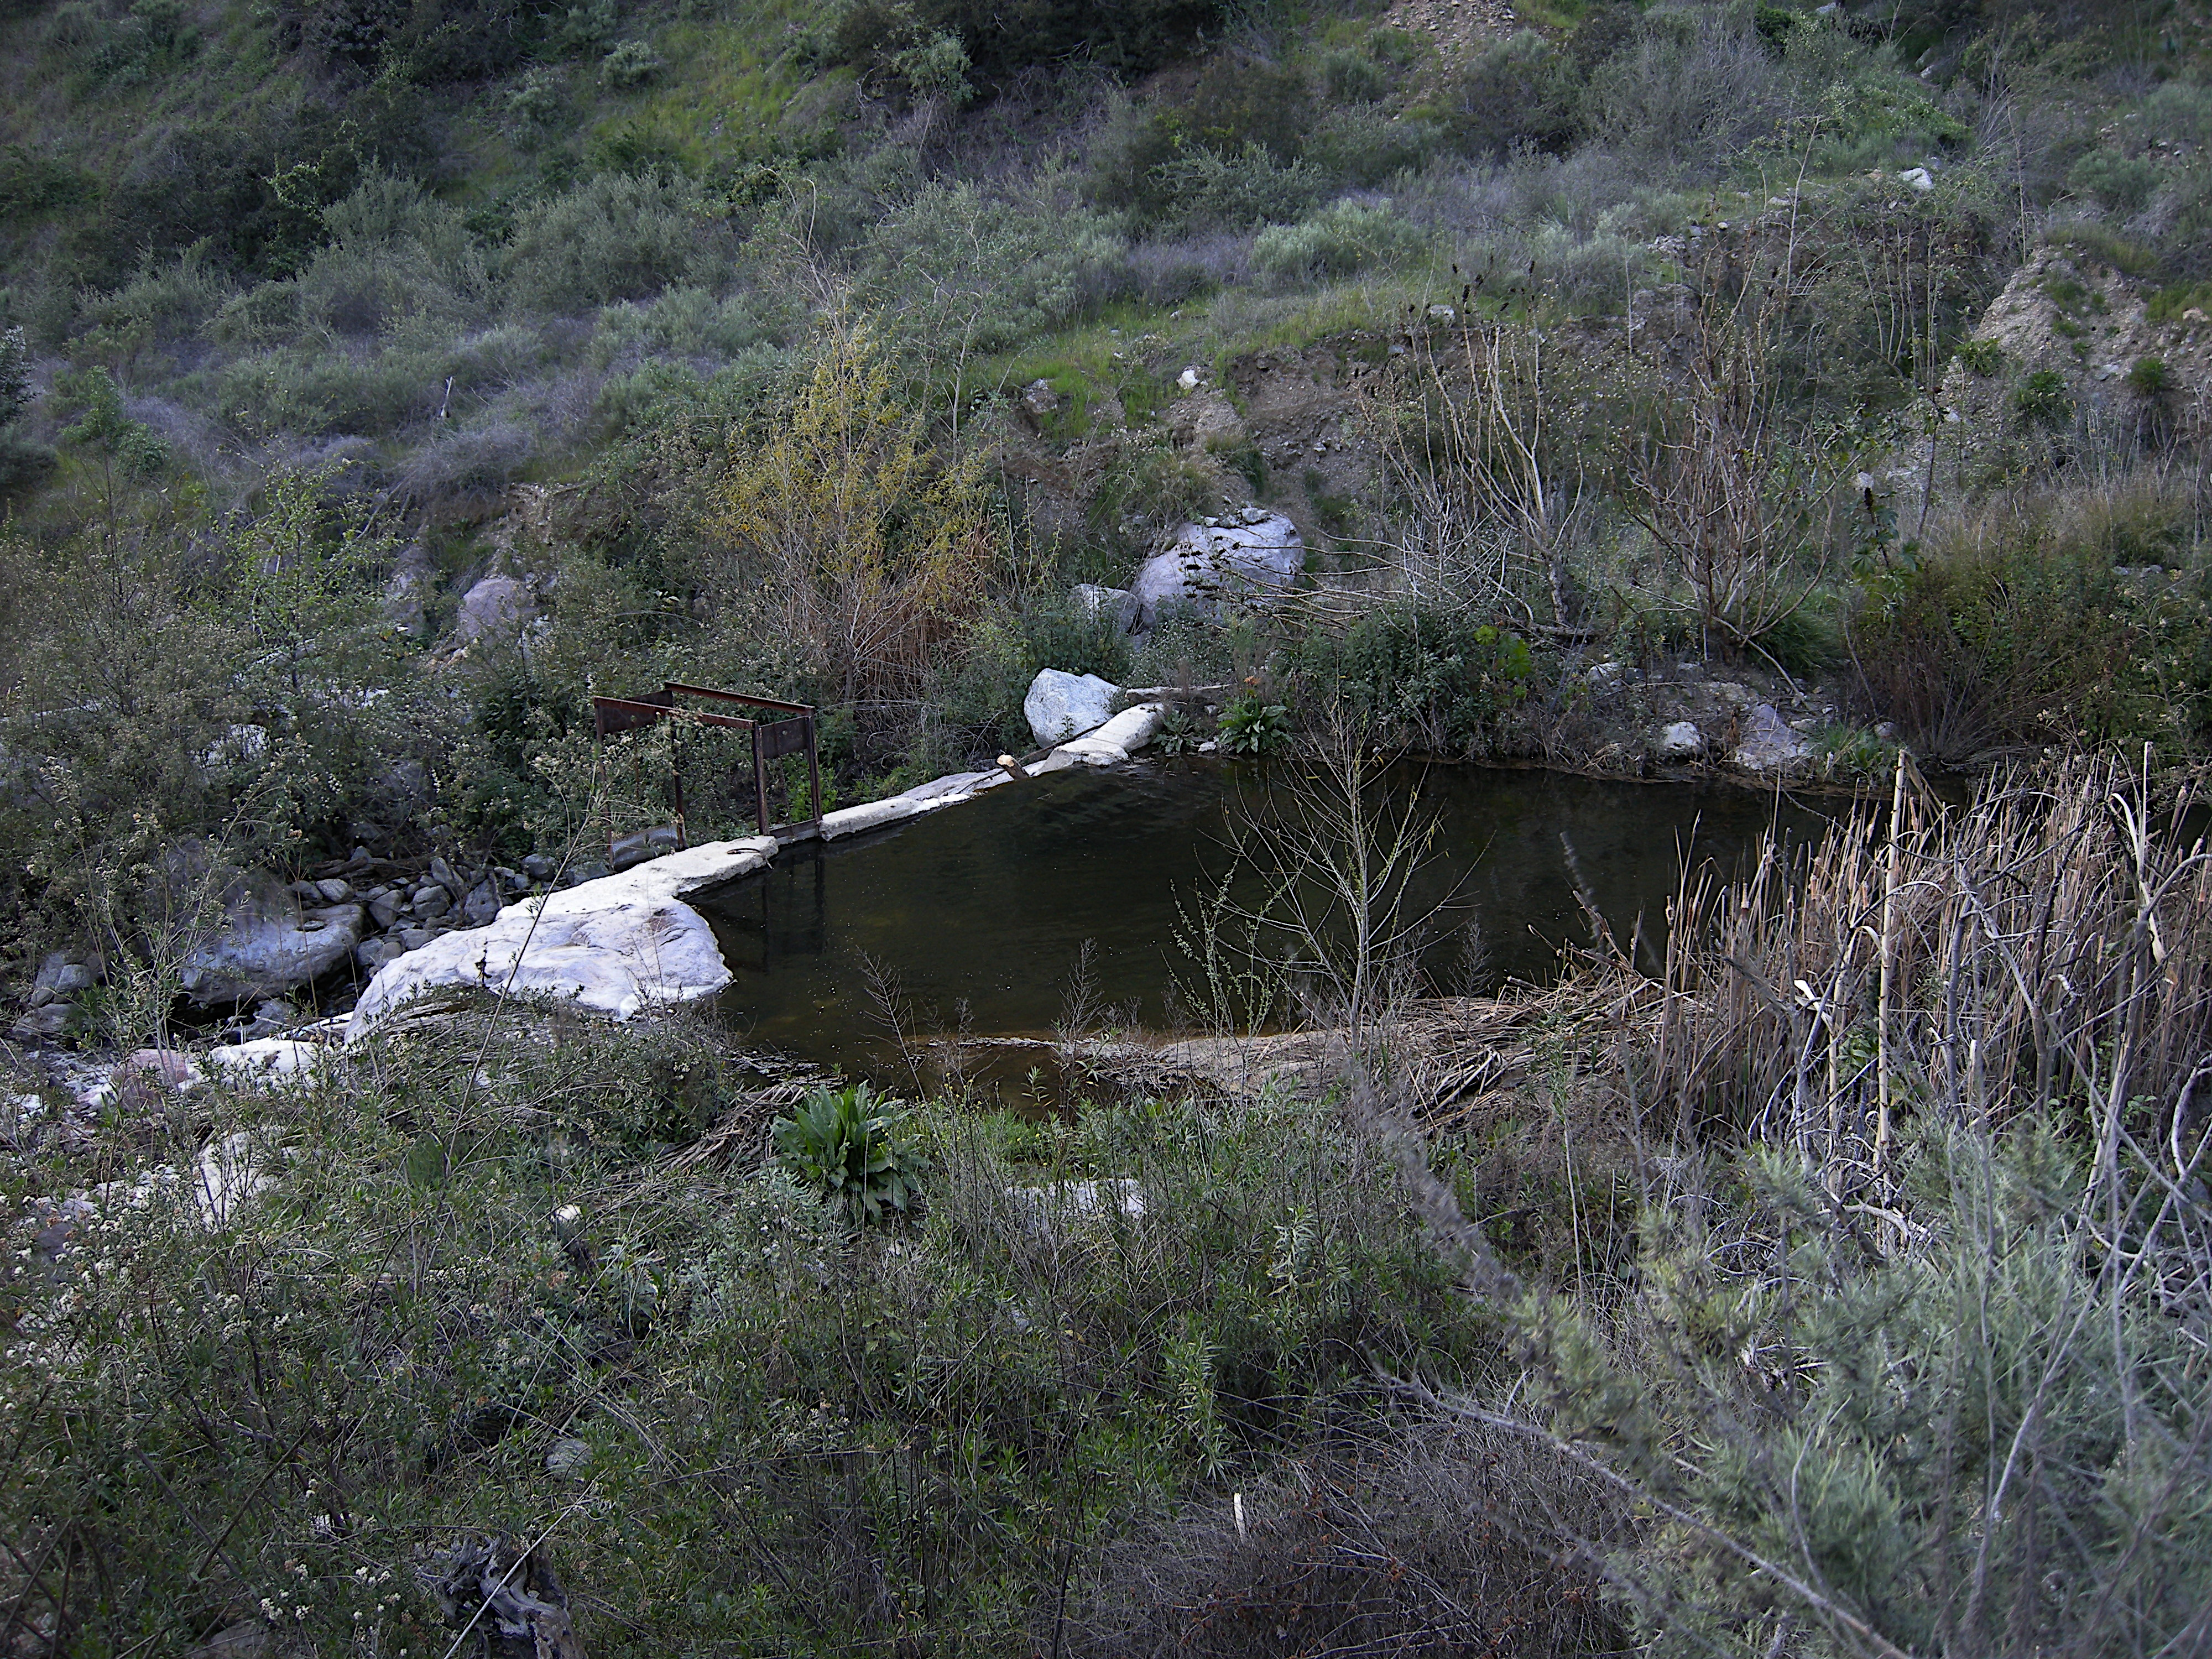 Water Diversion at San Dimas Canyon